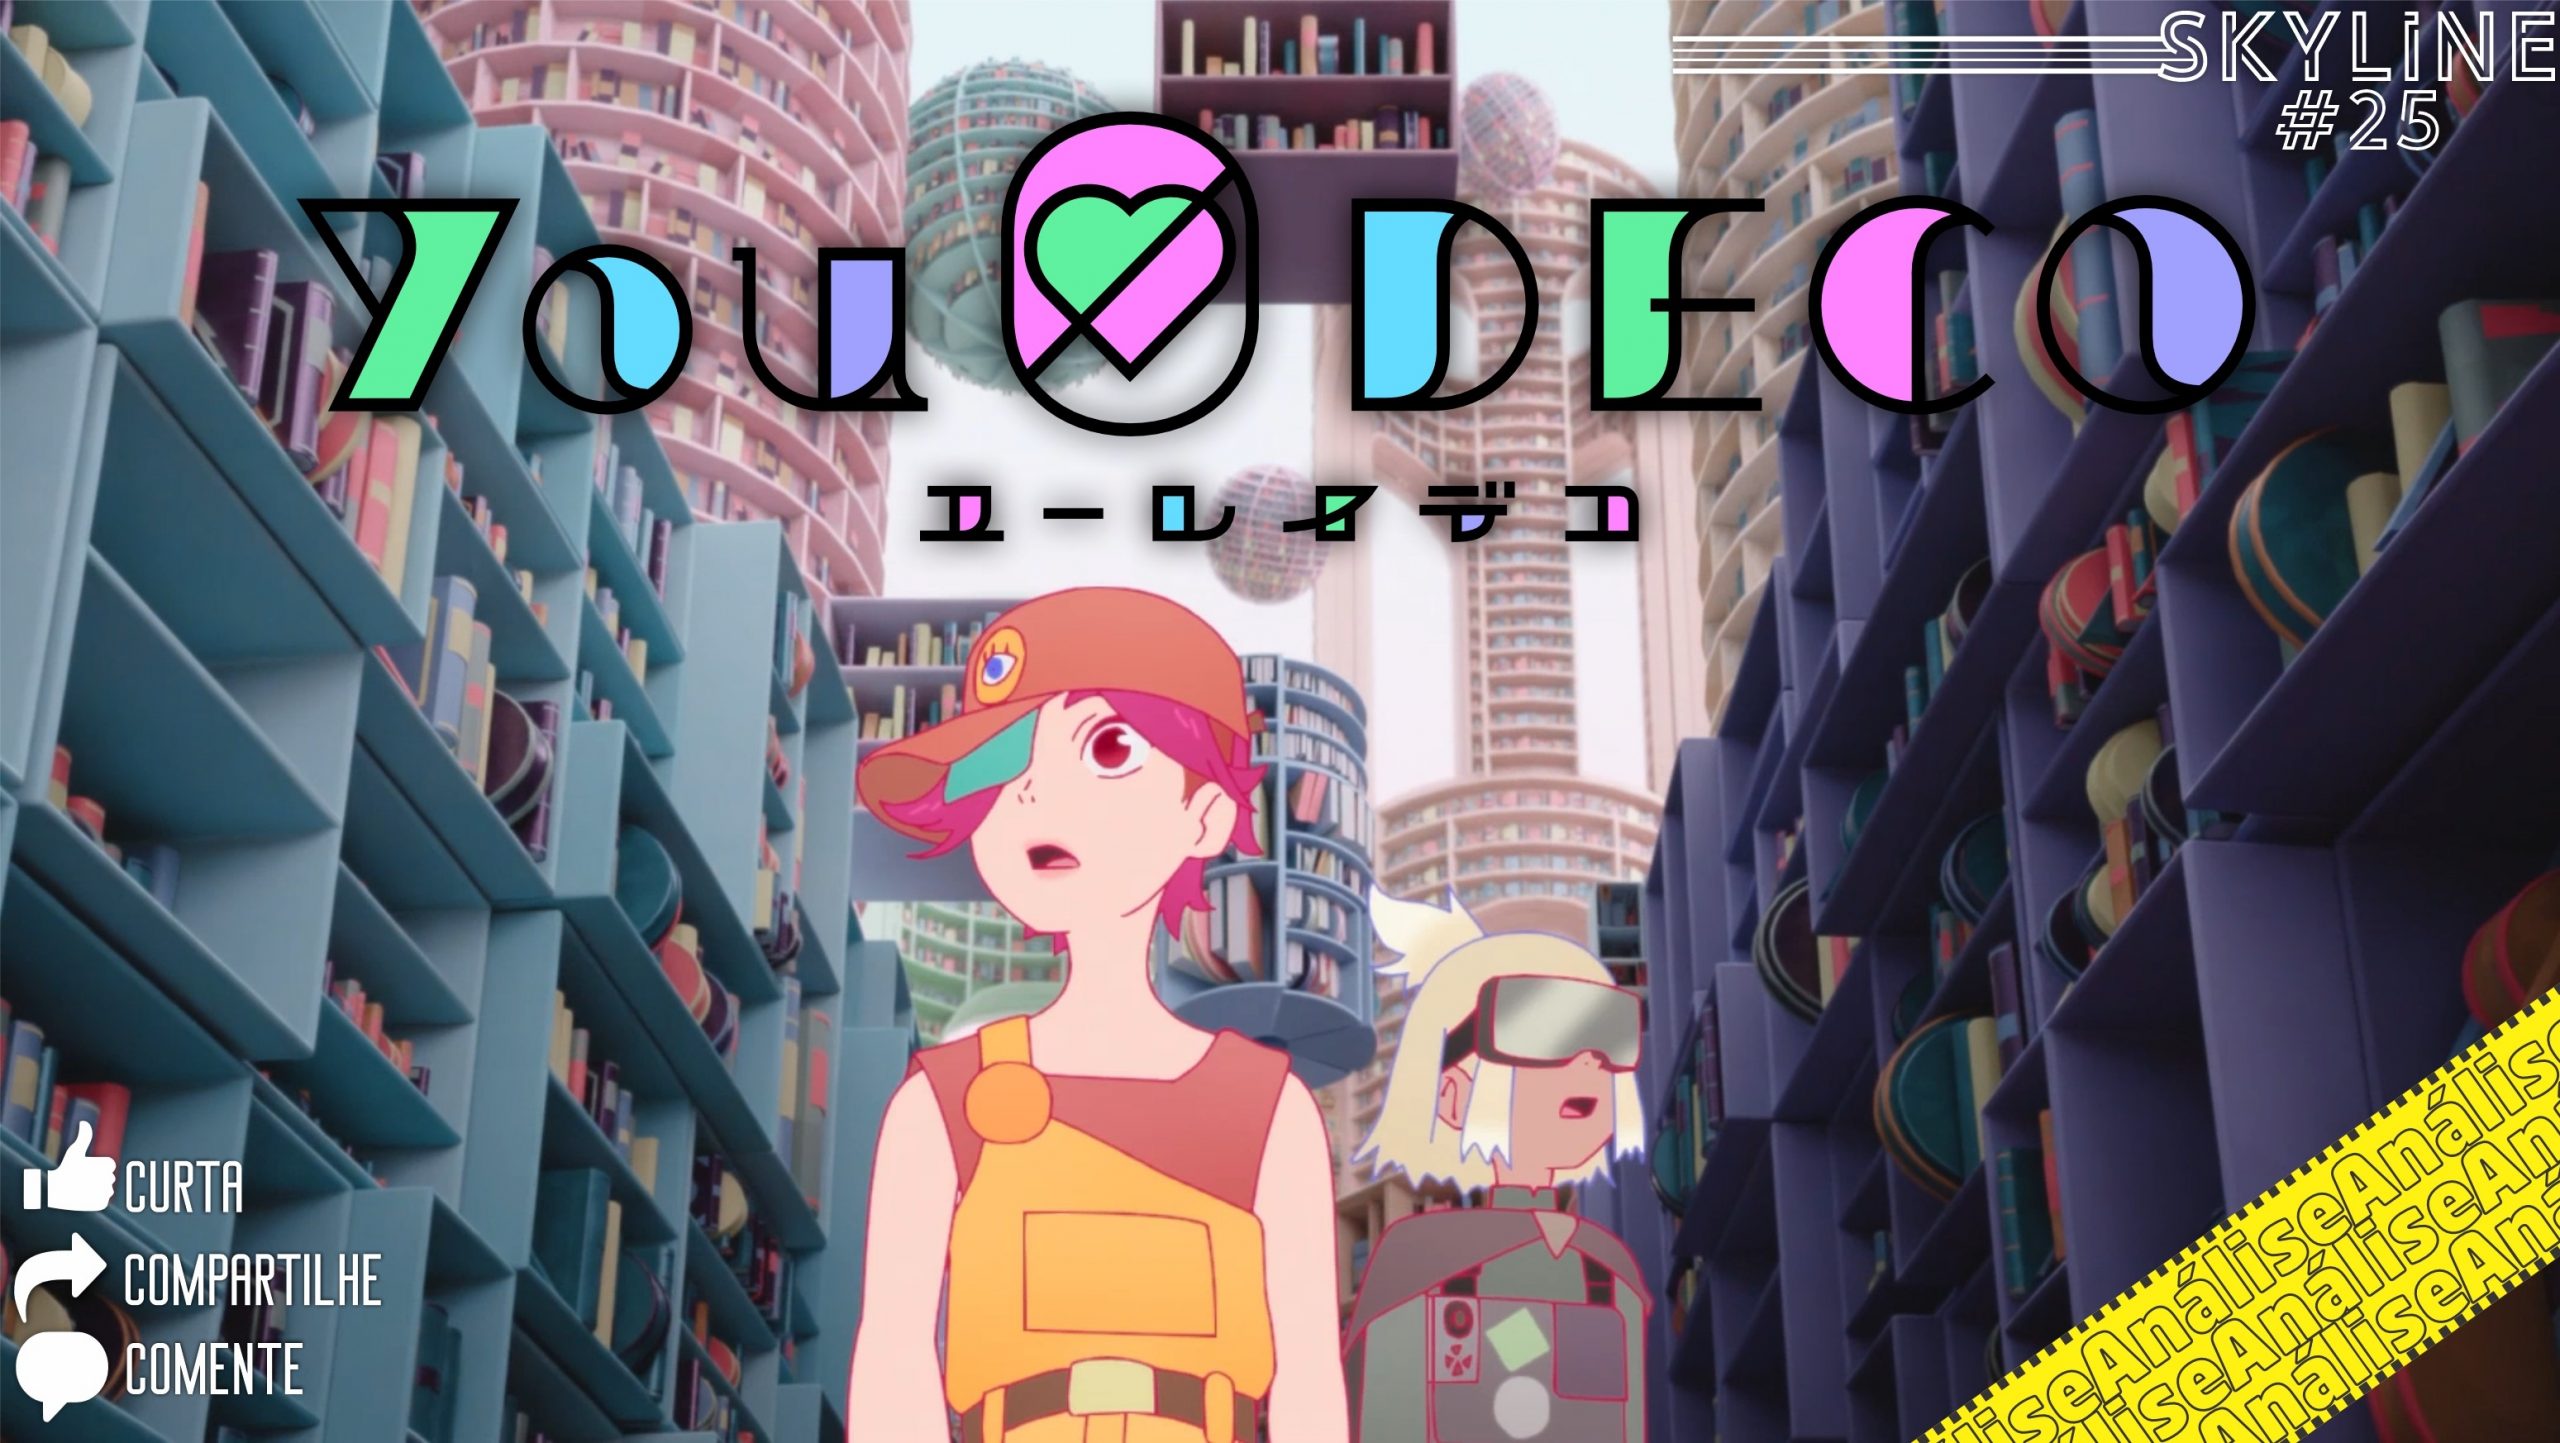 Assistir Yurei Deco Episódio 4 » Anime TV Online